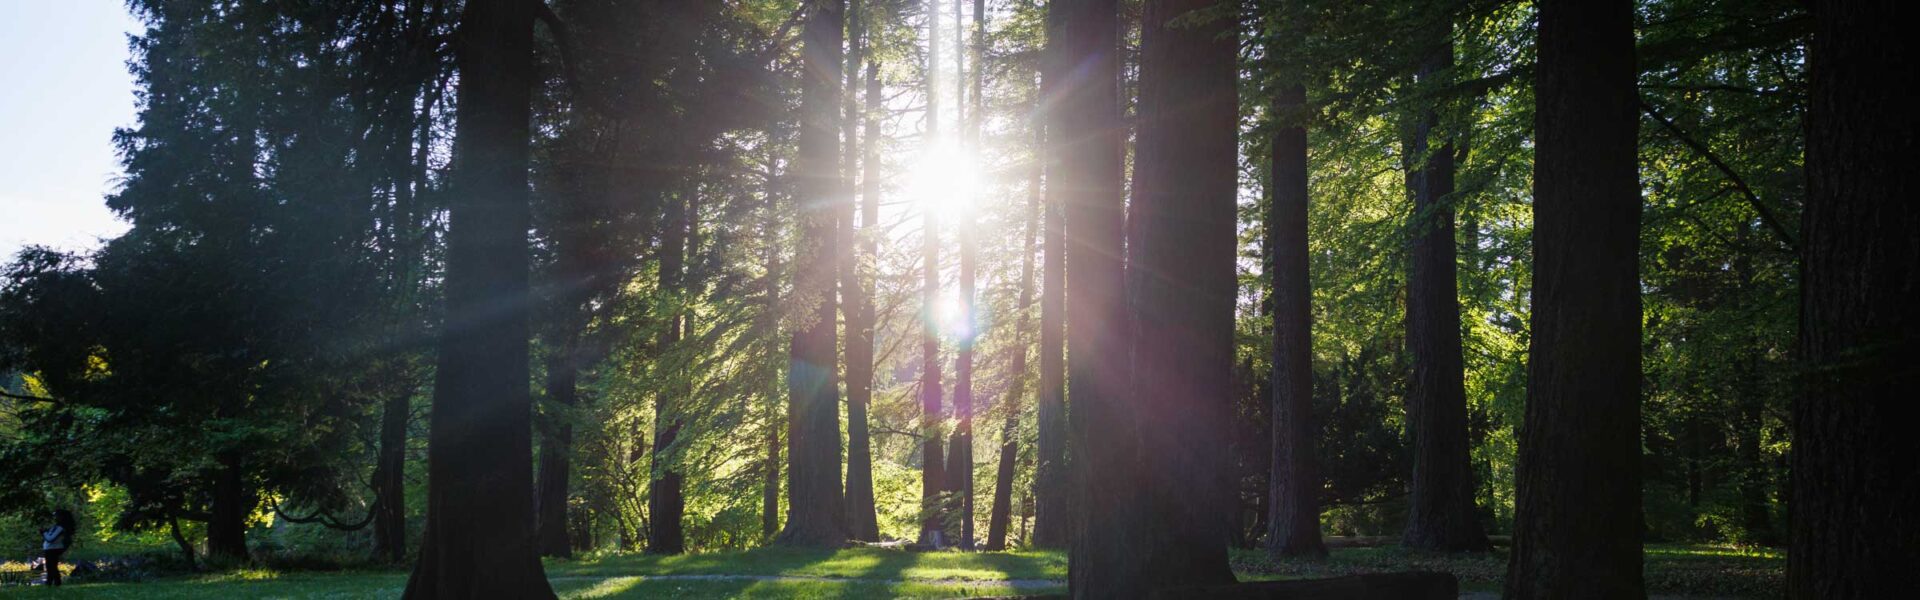 Sunlight shining through evergreen trees.